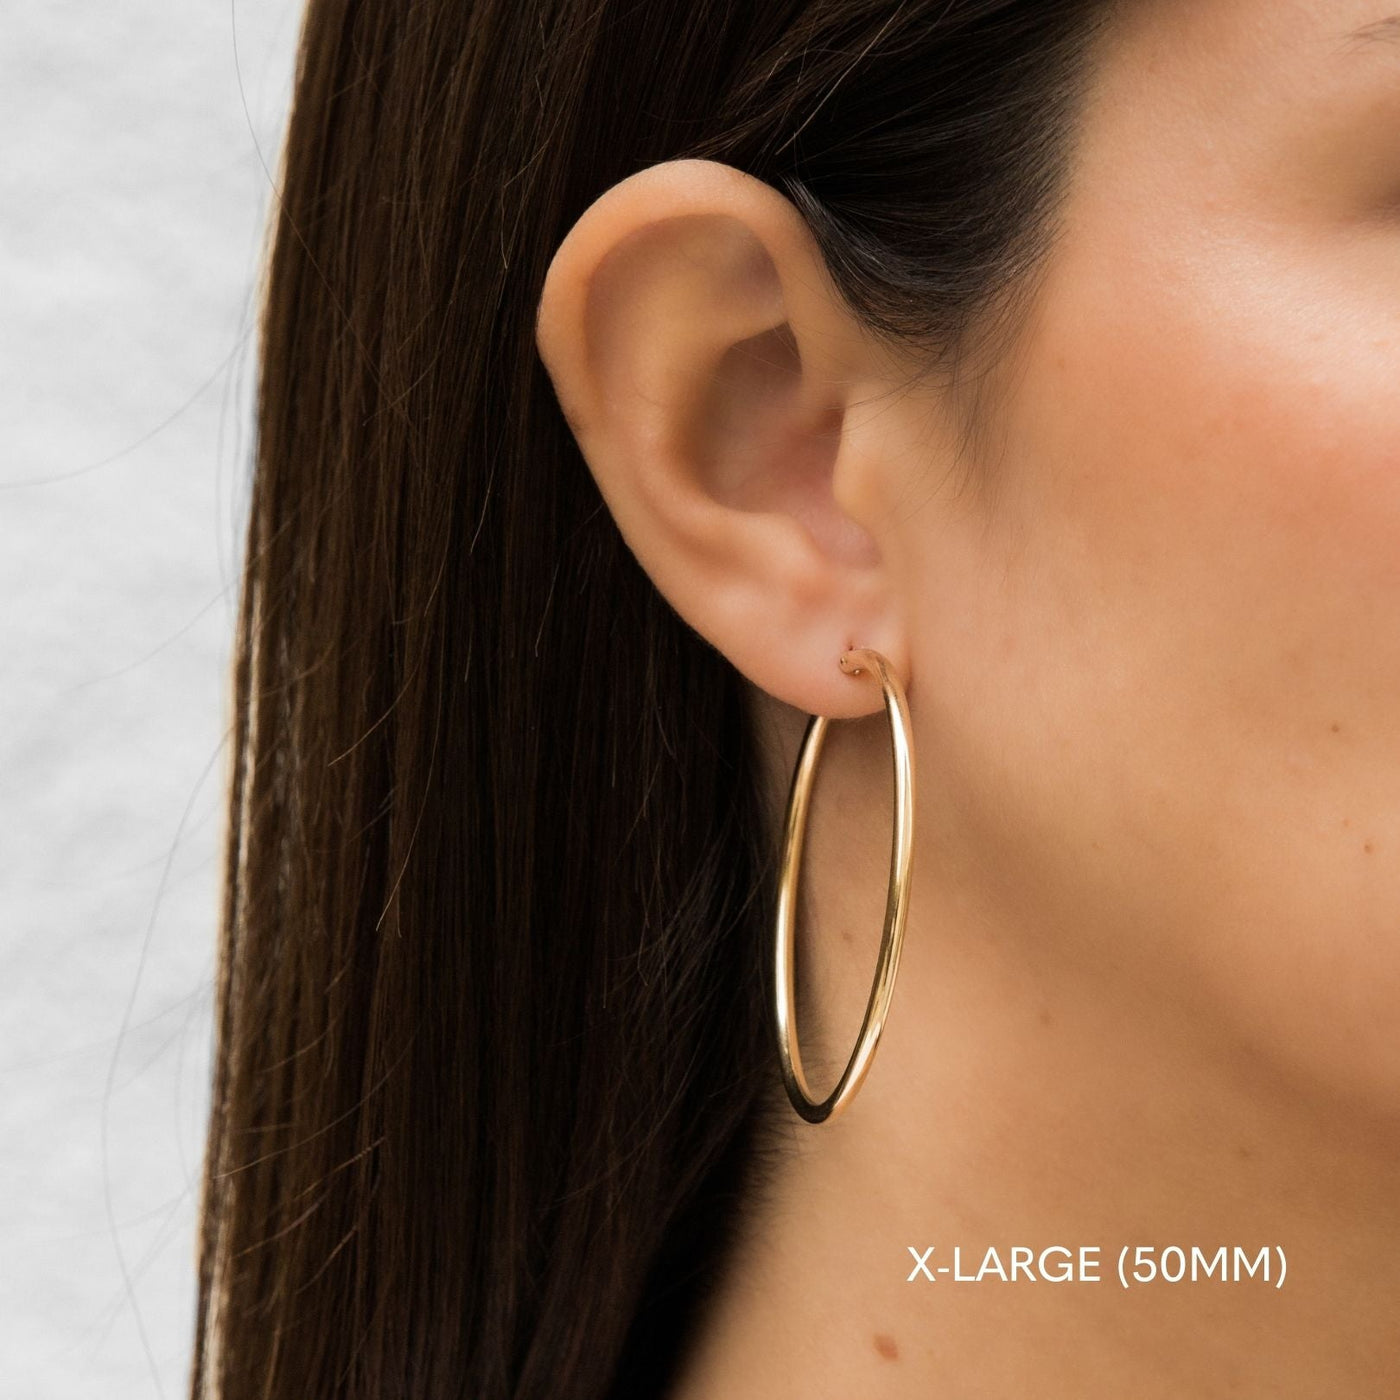 X-Large (50mm), Everyday Hoop Earrings by Simple & Dainty Jewelry